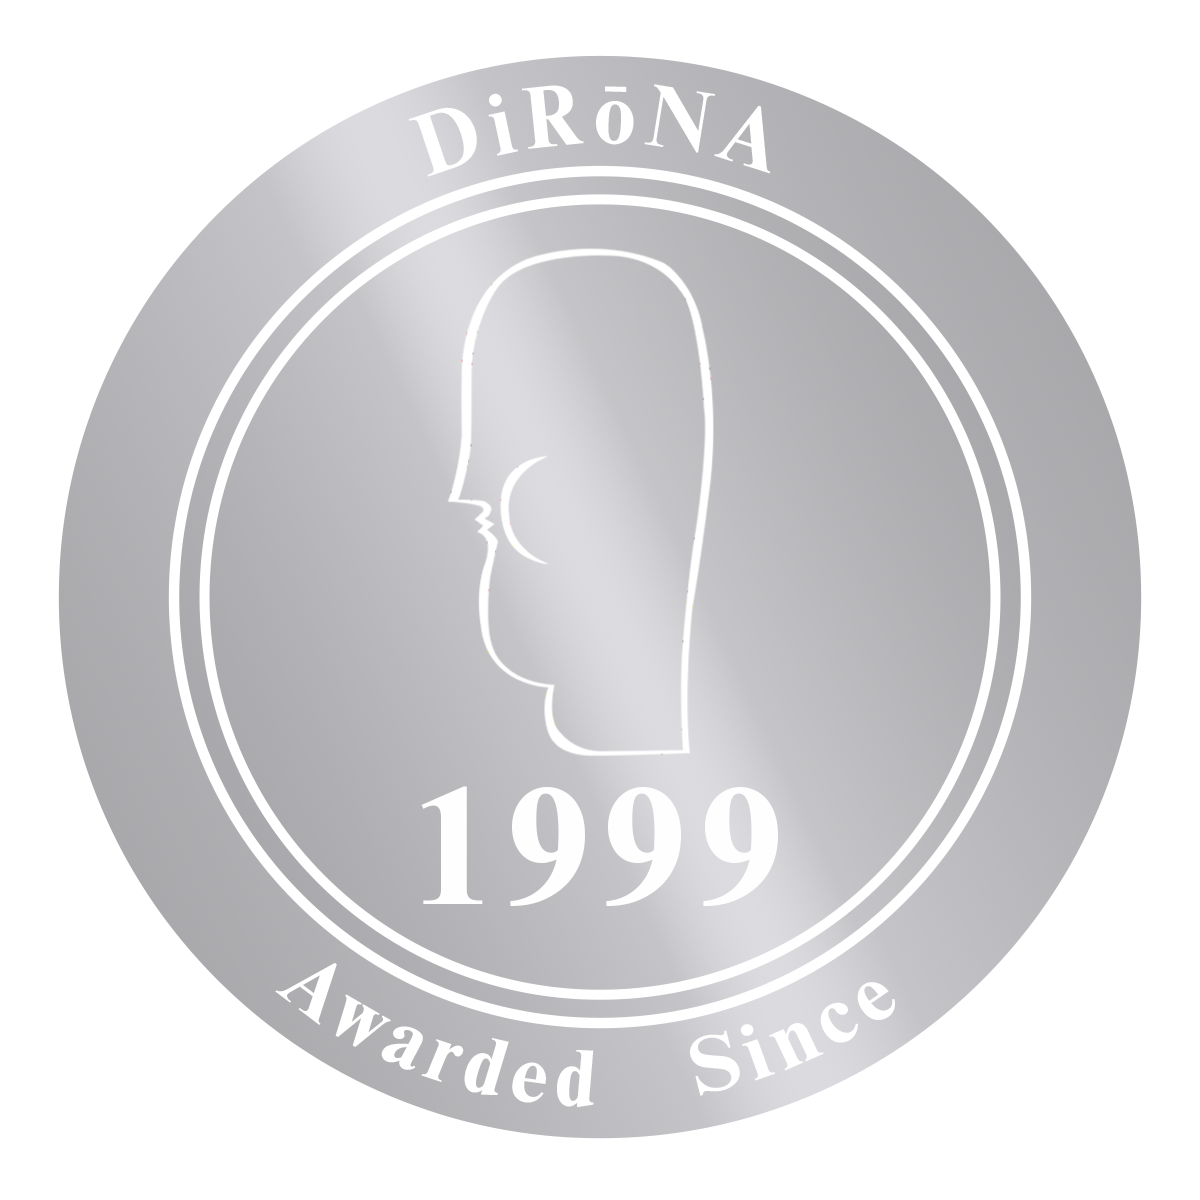 DiRoNA Awarded Restaurant Distinguished Restaurants of North America Badge